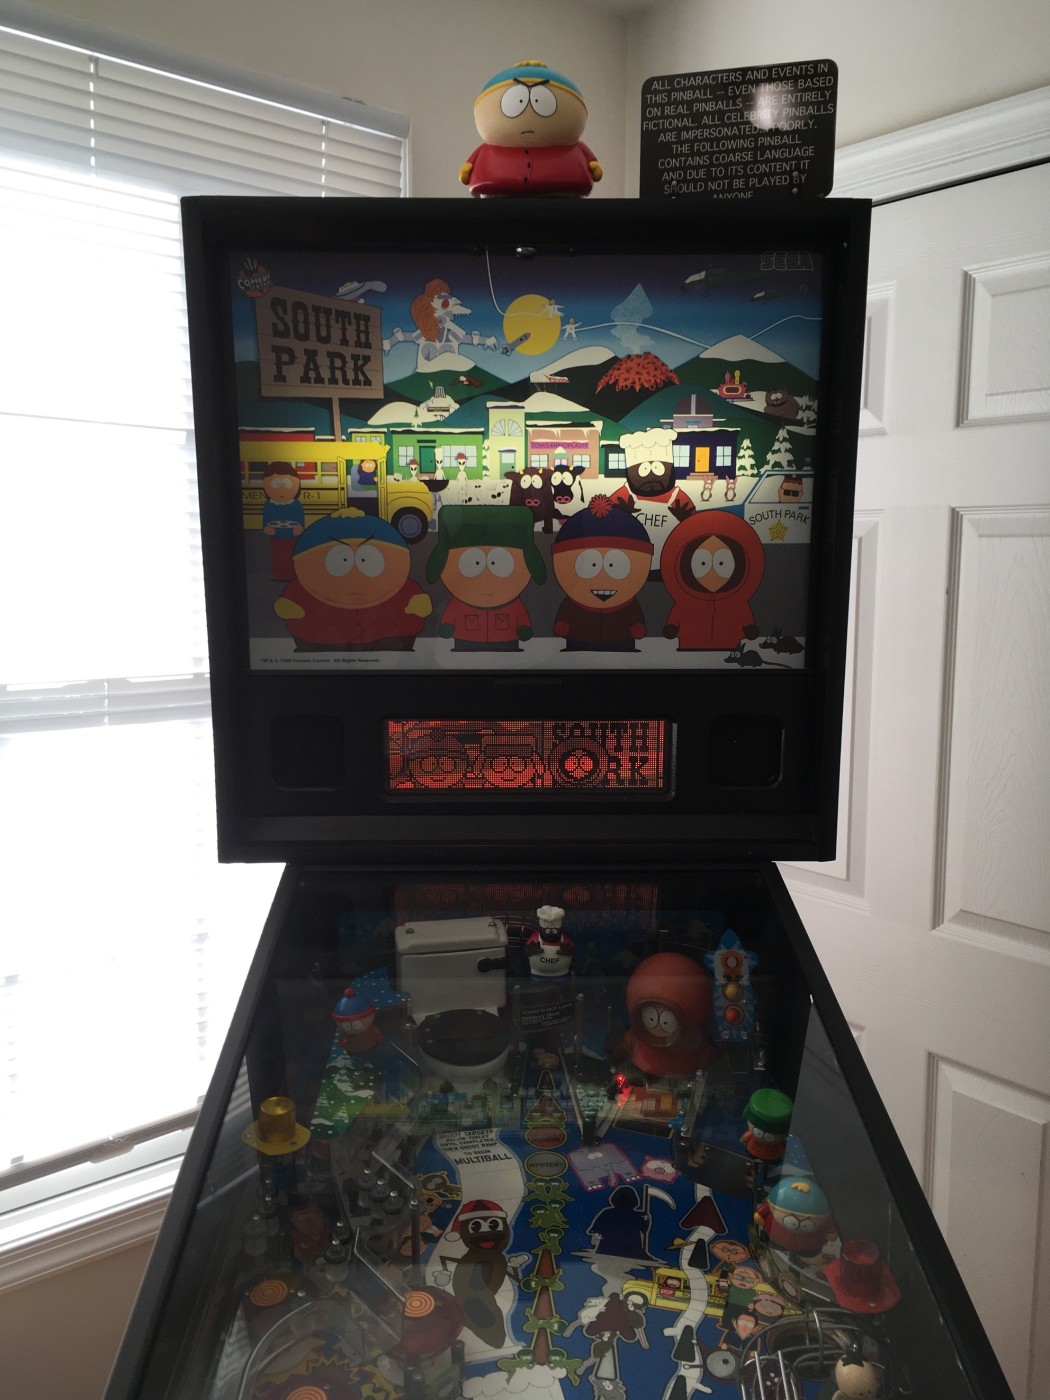 Details about   South Park Pinball Game Rug Mat Entrance Floor Door Cotton flipper backglass 